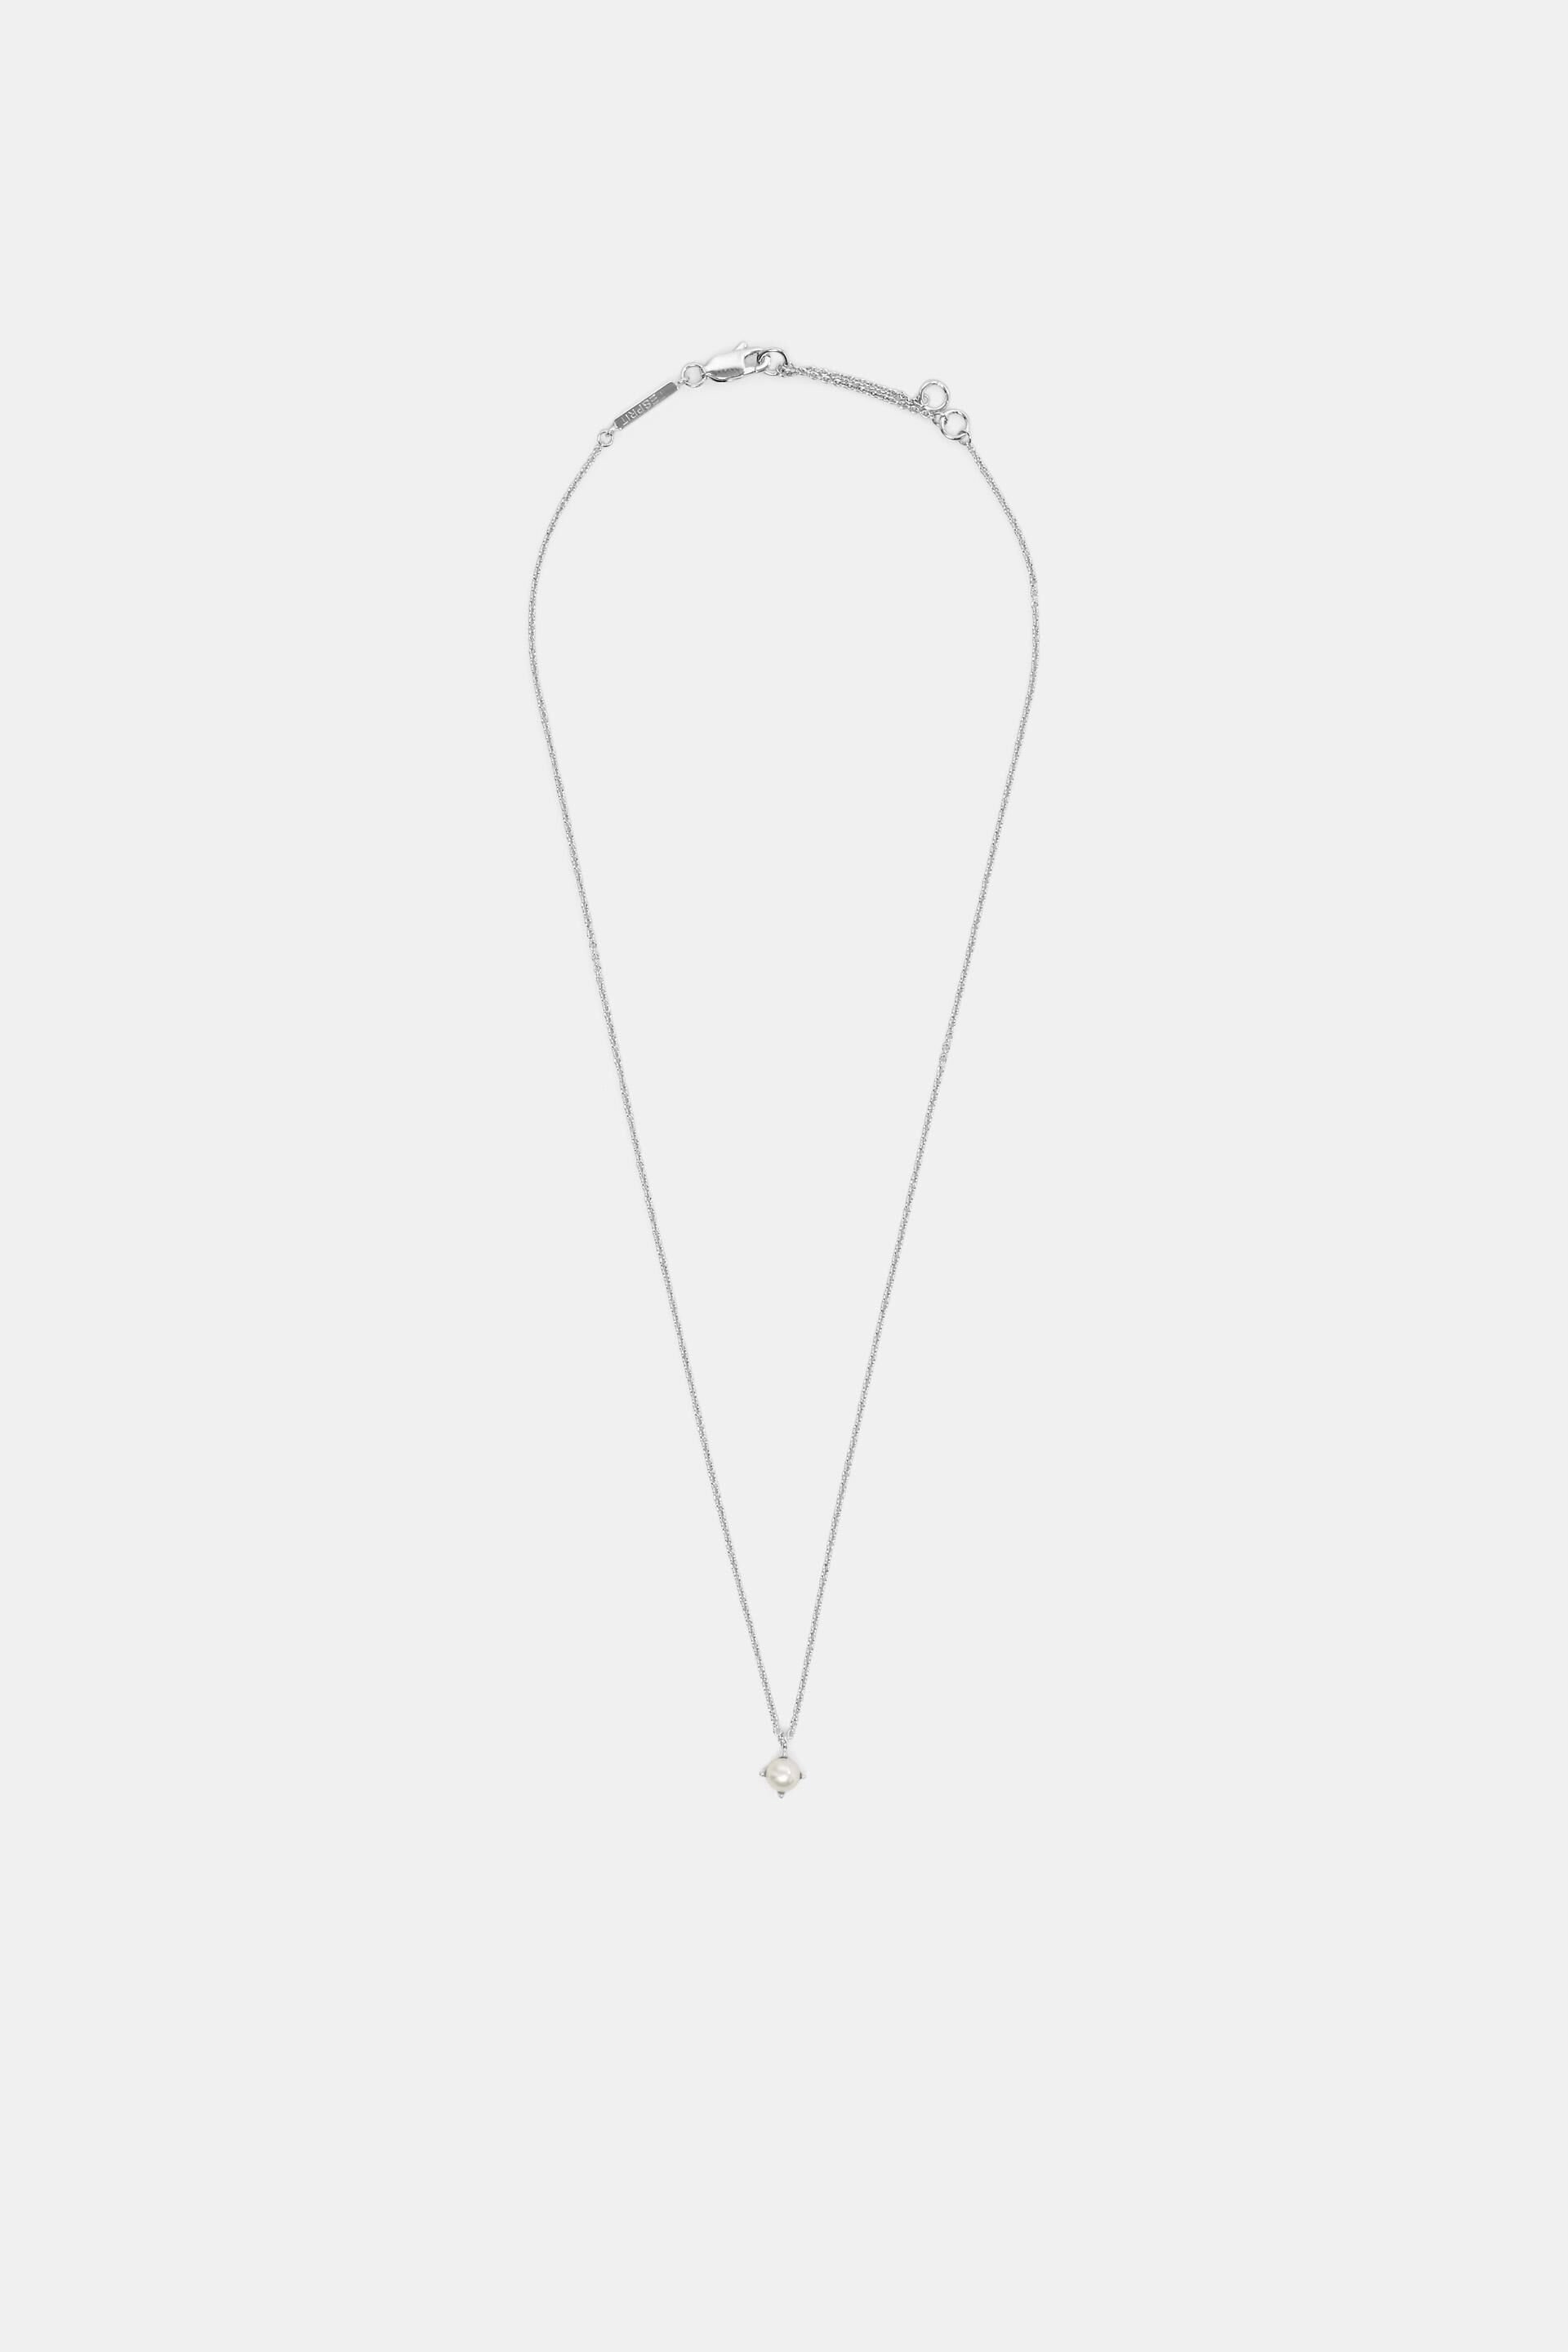 Esprit Necklace Pendant Silver Sterling Dainty